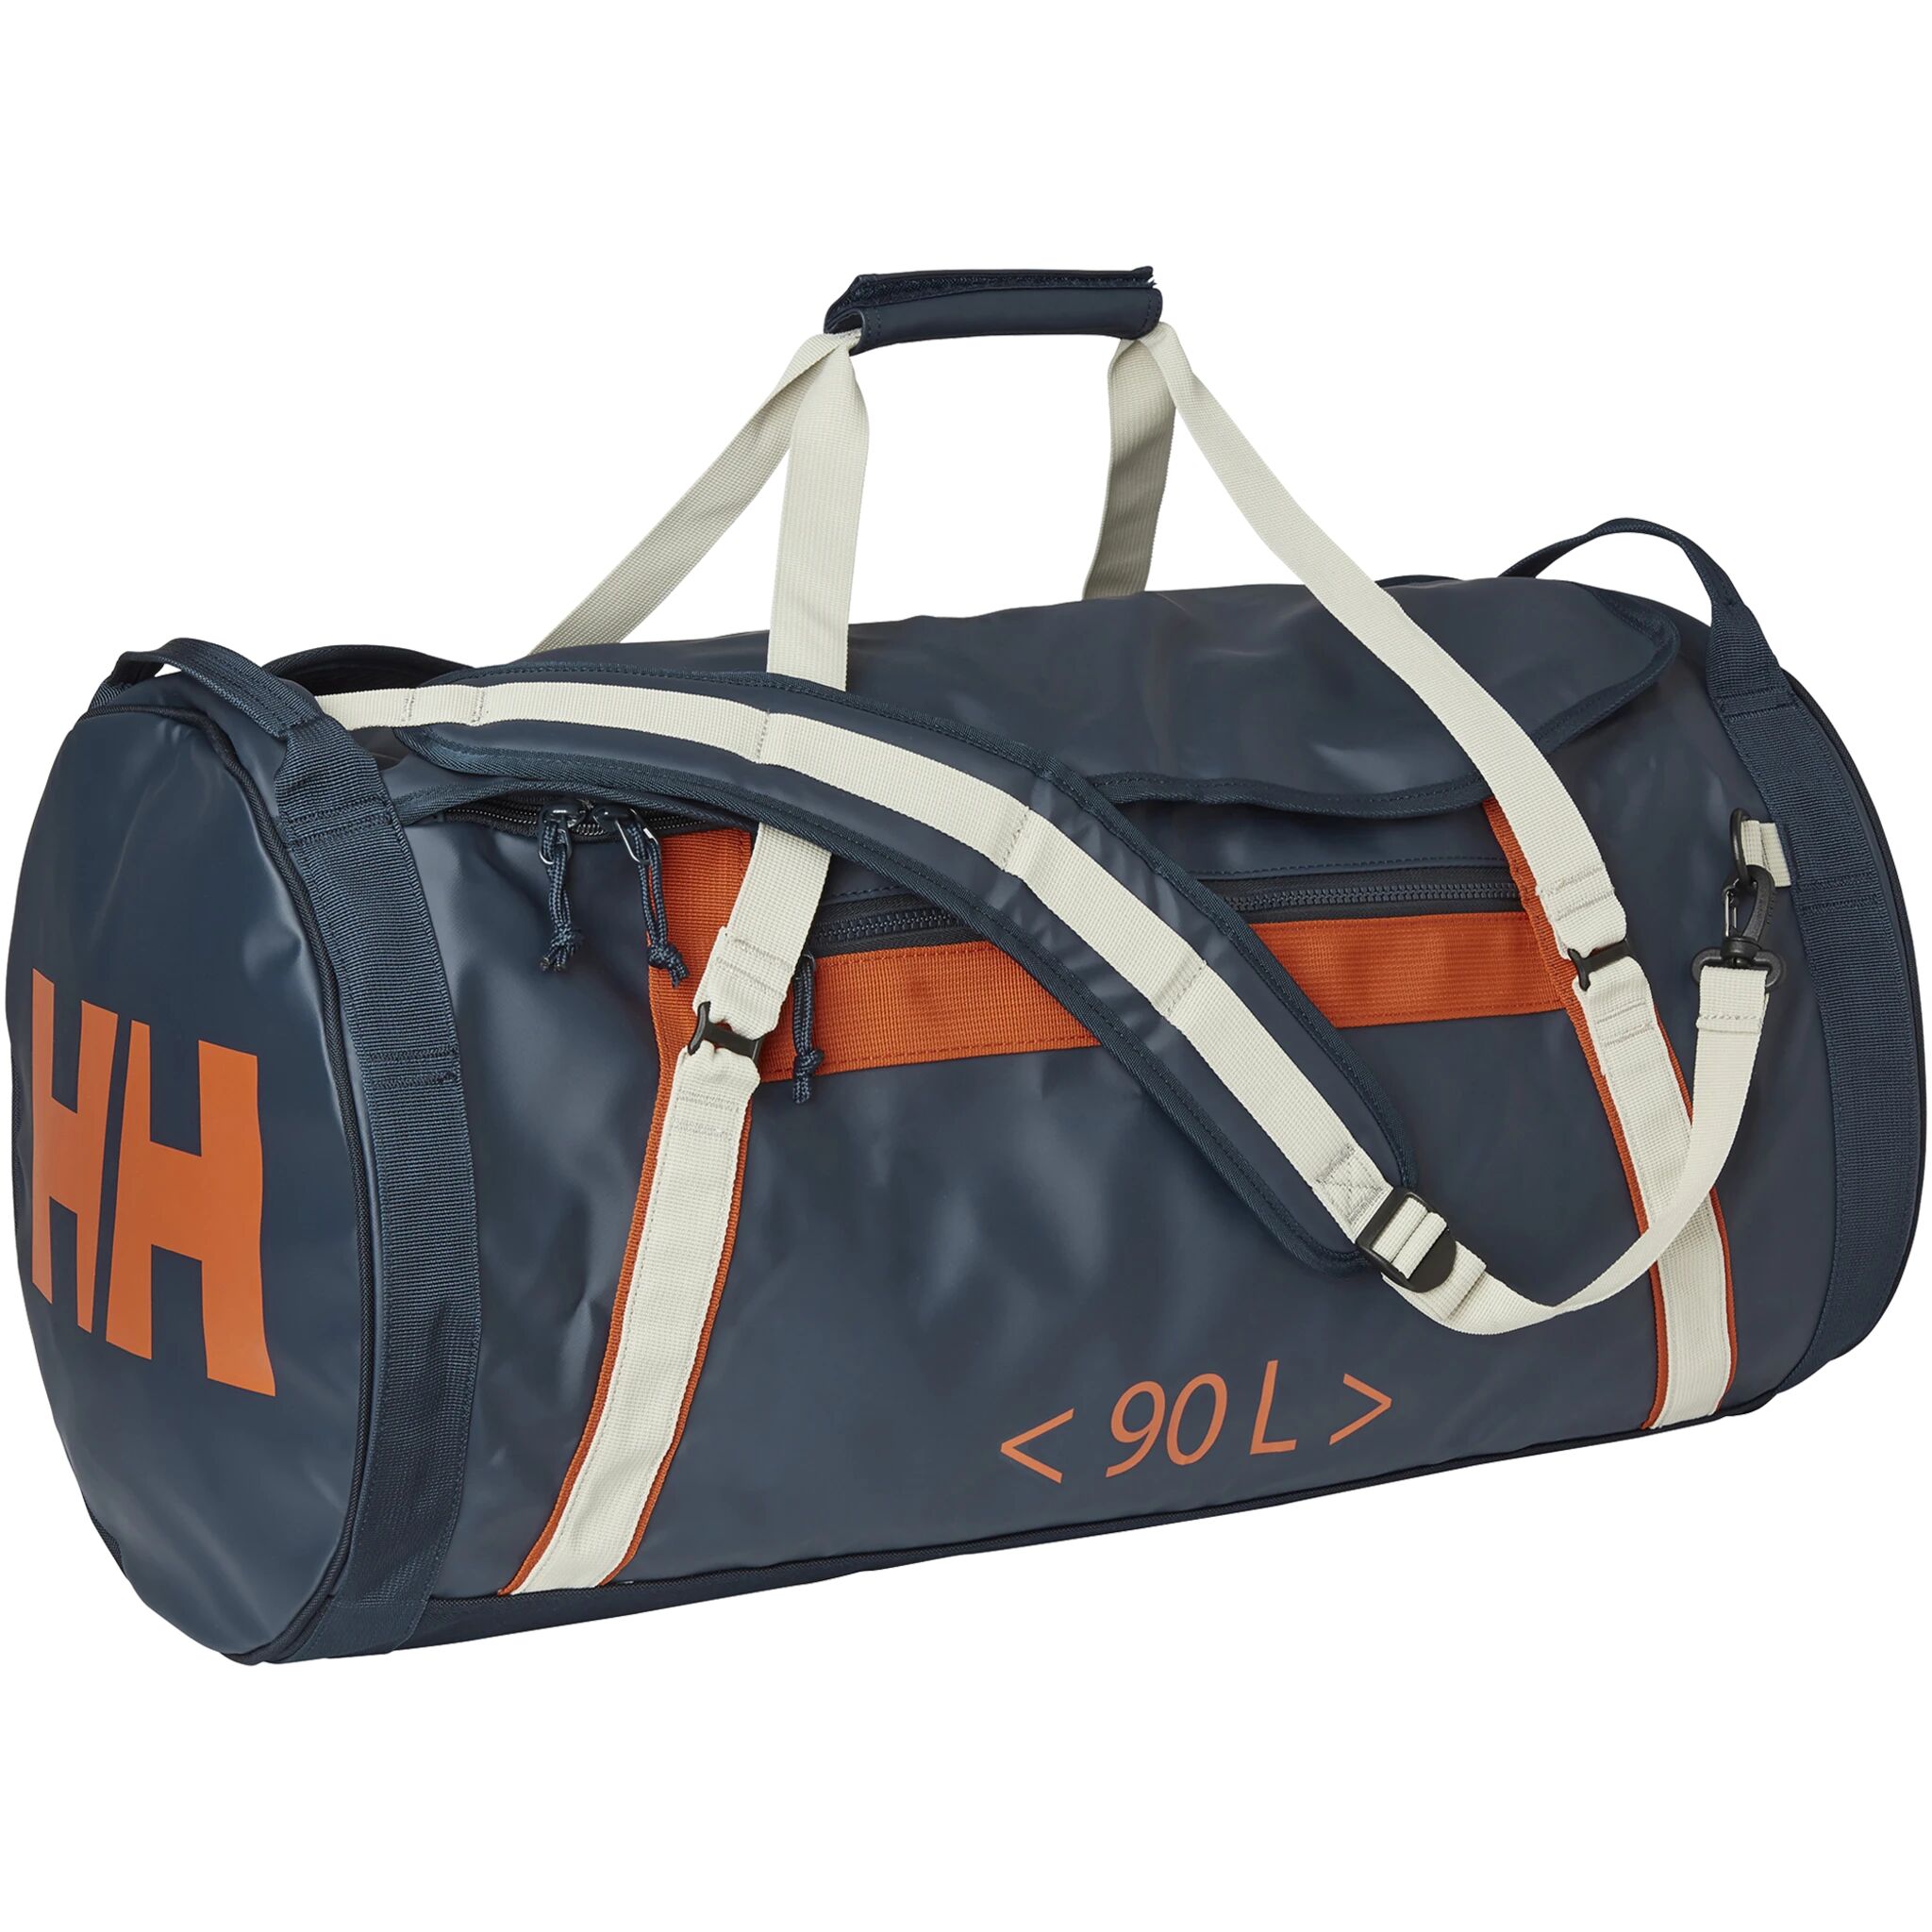 Helly Hansen Duffel Bag 2 90L, bag  90L navy